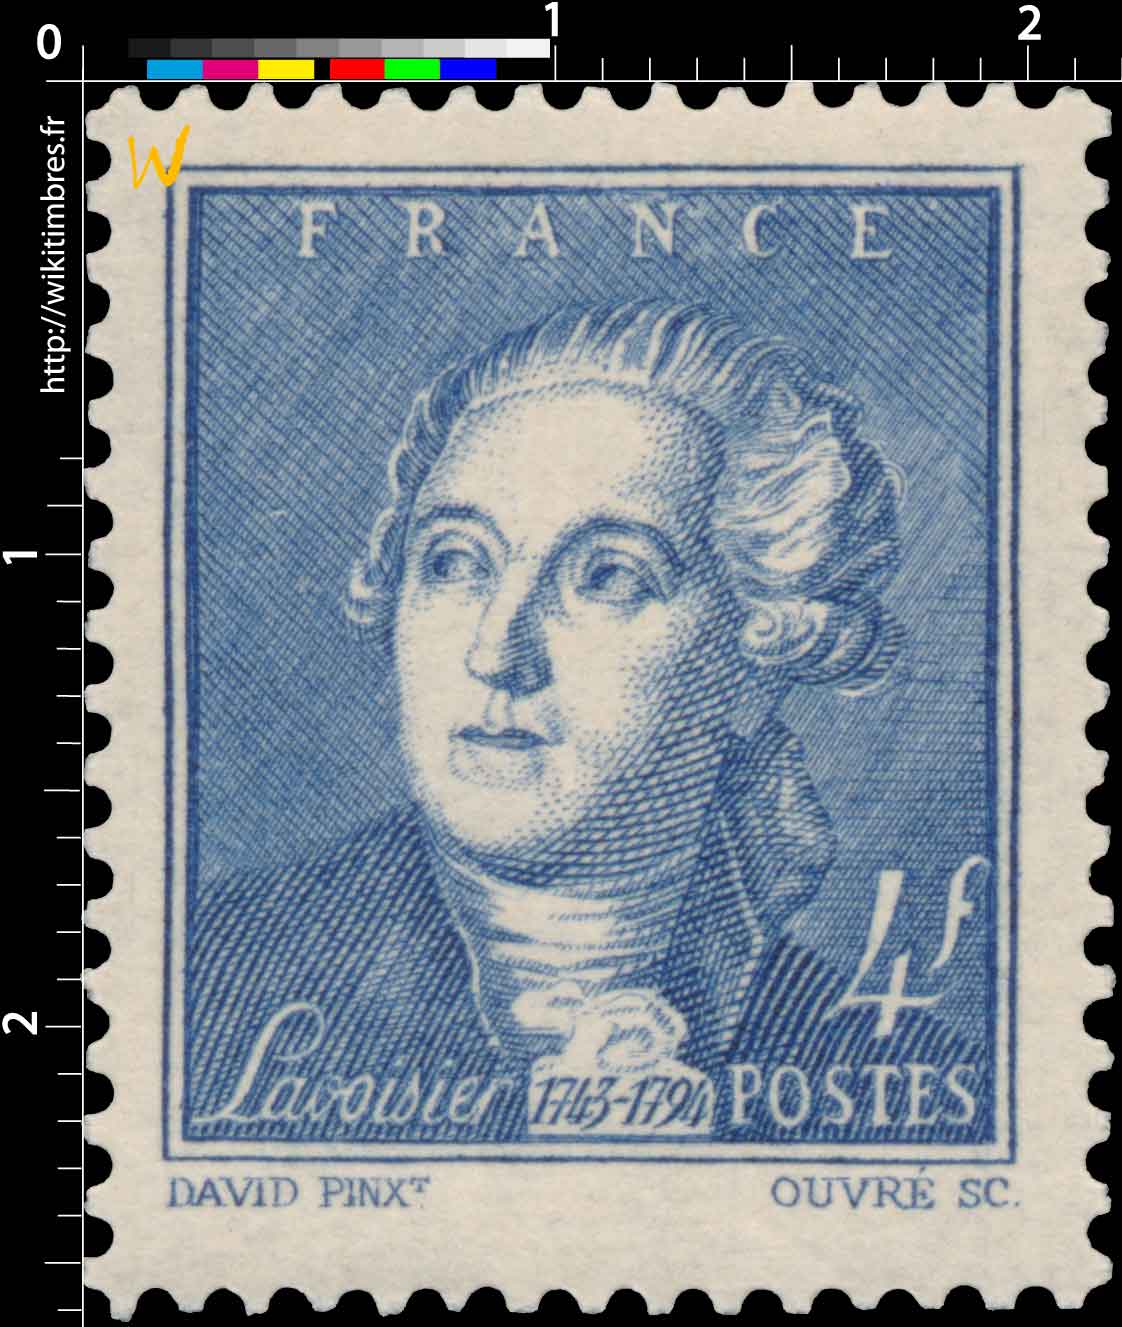 LAVOISIER 1743-1794